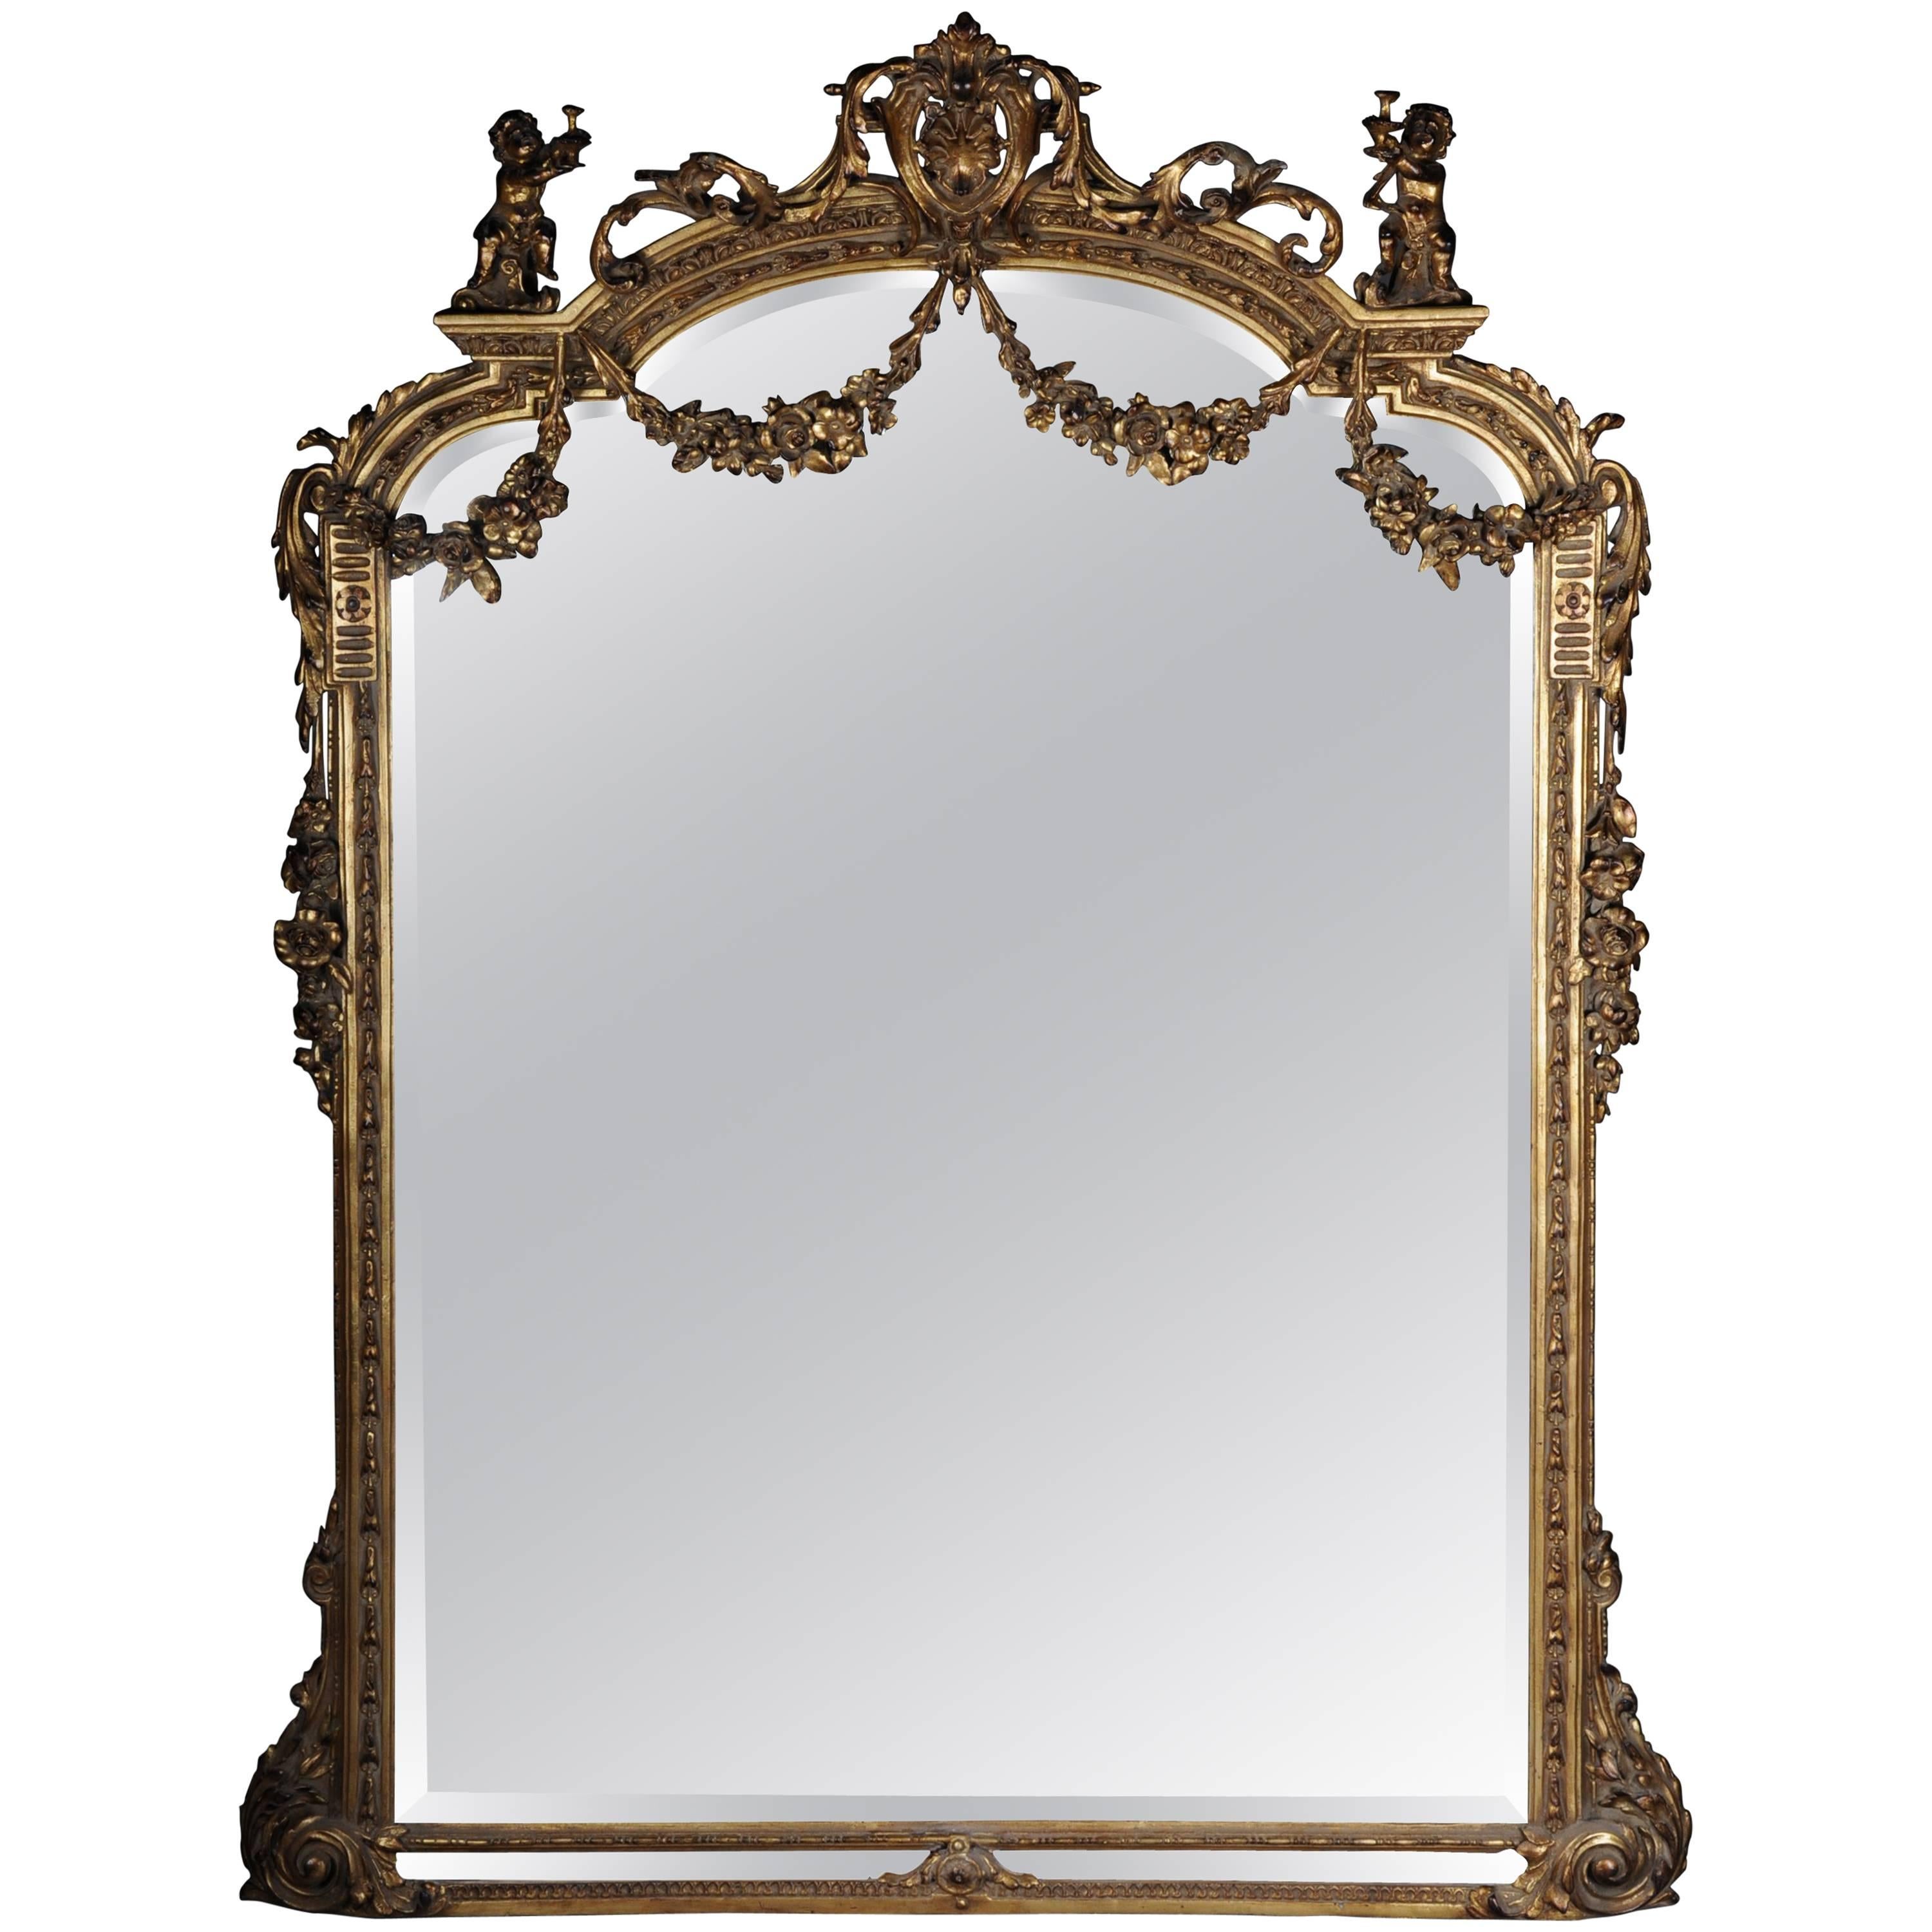 Large Full-Length Standing Mirror in Louis XVI